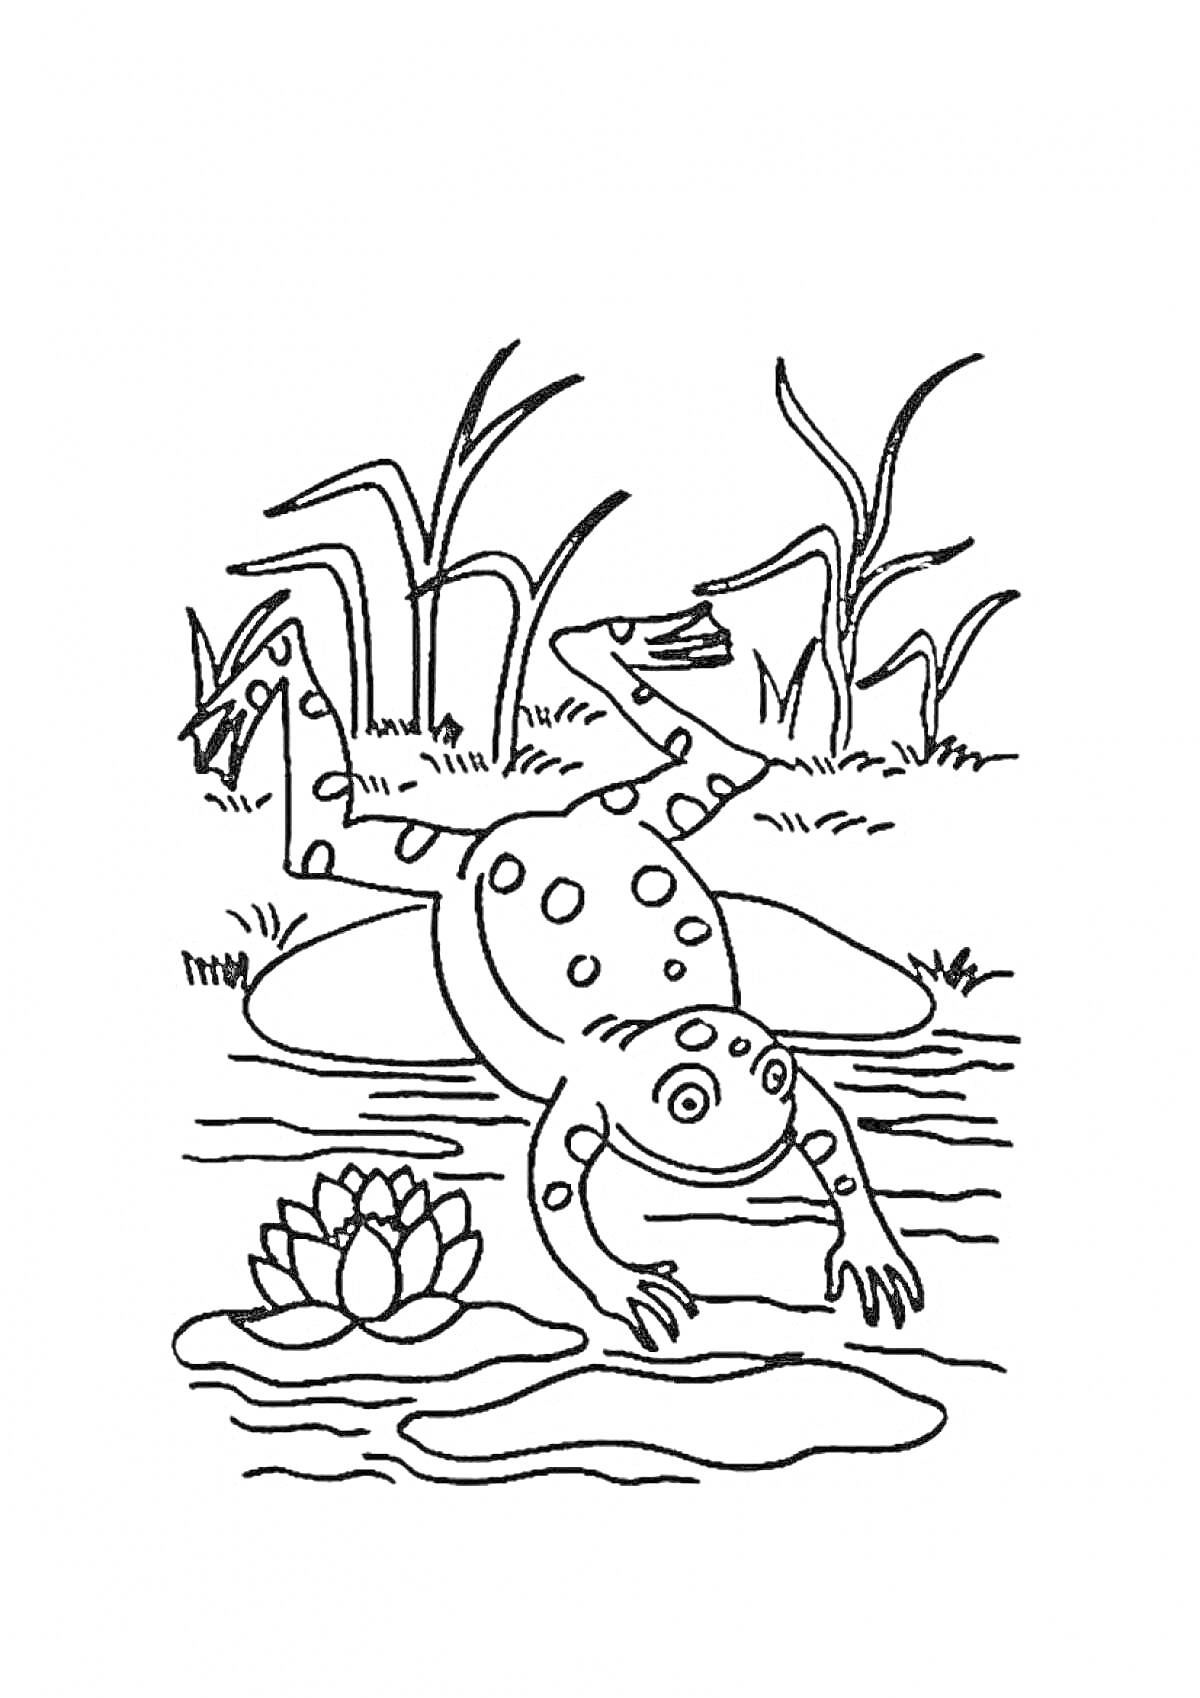 Раскраска Лягушка путешественница у пруда с кувшинкой и камышами